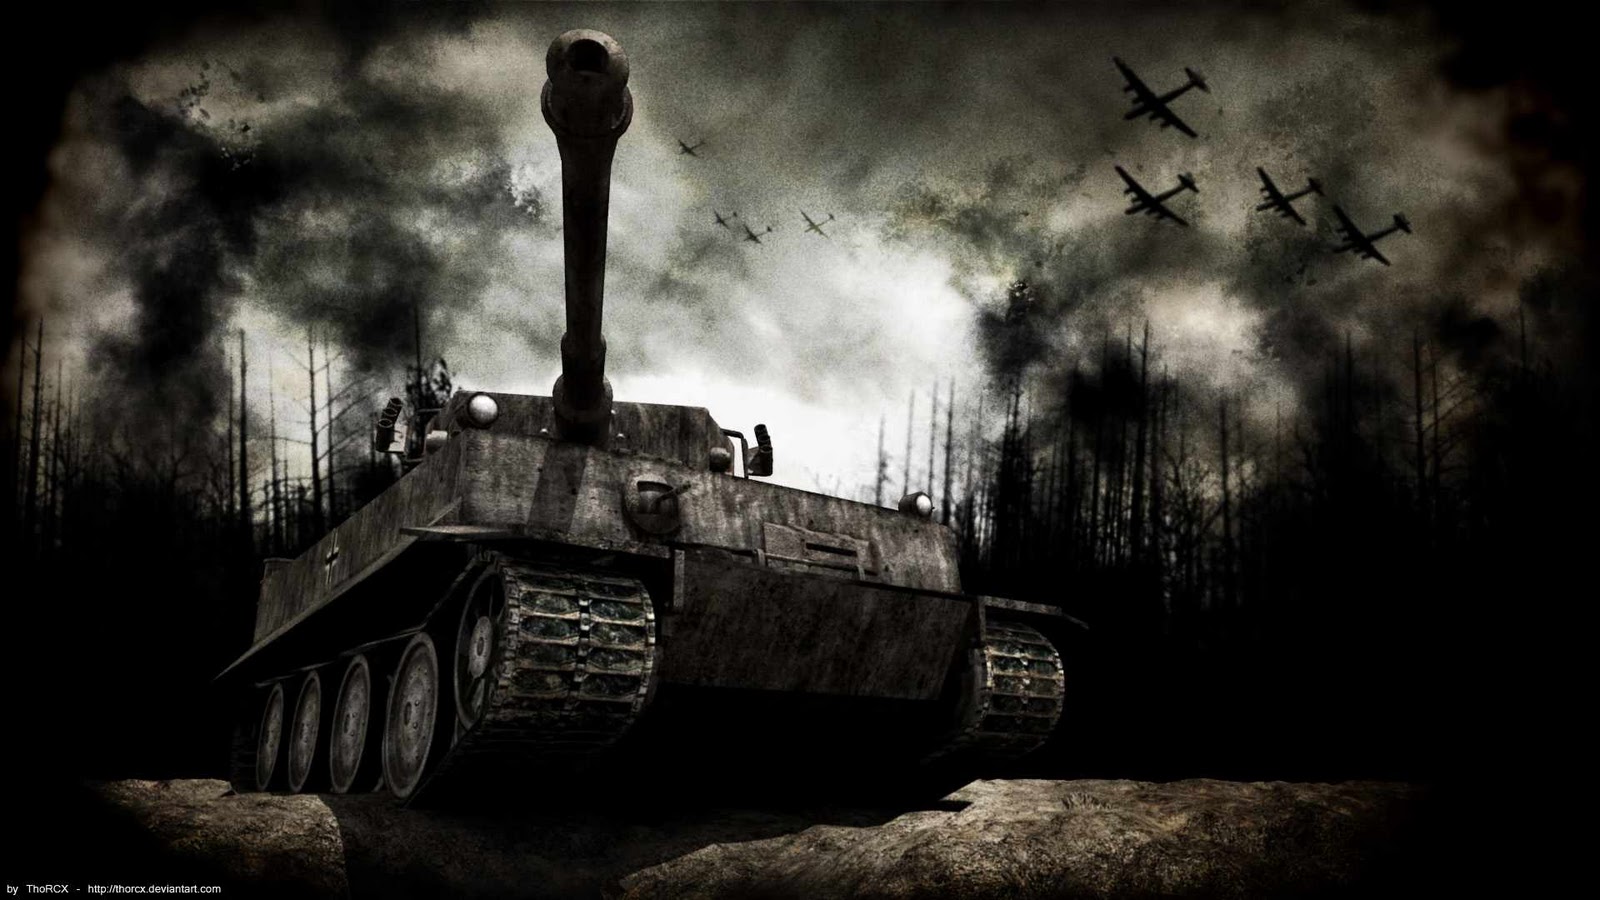 https://blogger.googleusercontent.com/img/b/R29vZ2xl/AVvXsEjzeRB8Eag9VxxVcVS0AKpEmfQgcvN9KVJihiPkyTiQD9GiTda1iXdIxNb3uYeRPlOlfBtj2ivf27mH0RpM5AMLNQoSCvmRHmCS0-QYQdR_1FP6N8jS2RtA772RMSU45WAa9jto2d02O84/s1600/Panzer+Tank+World+War+II.jpg